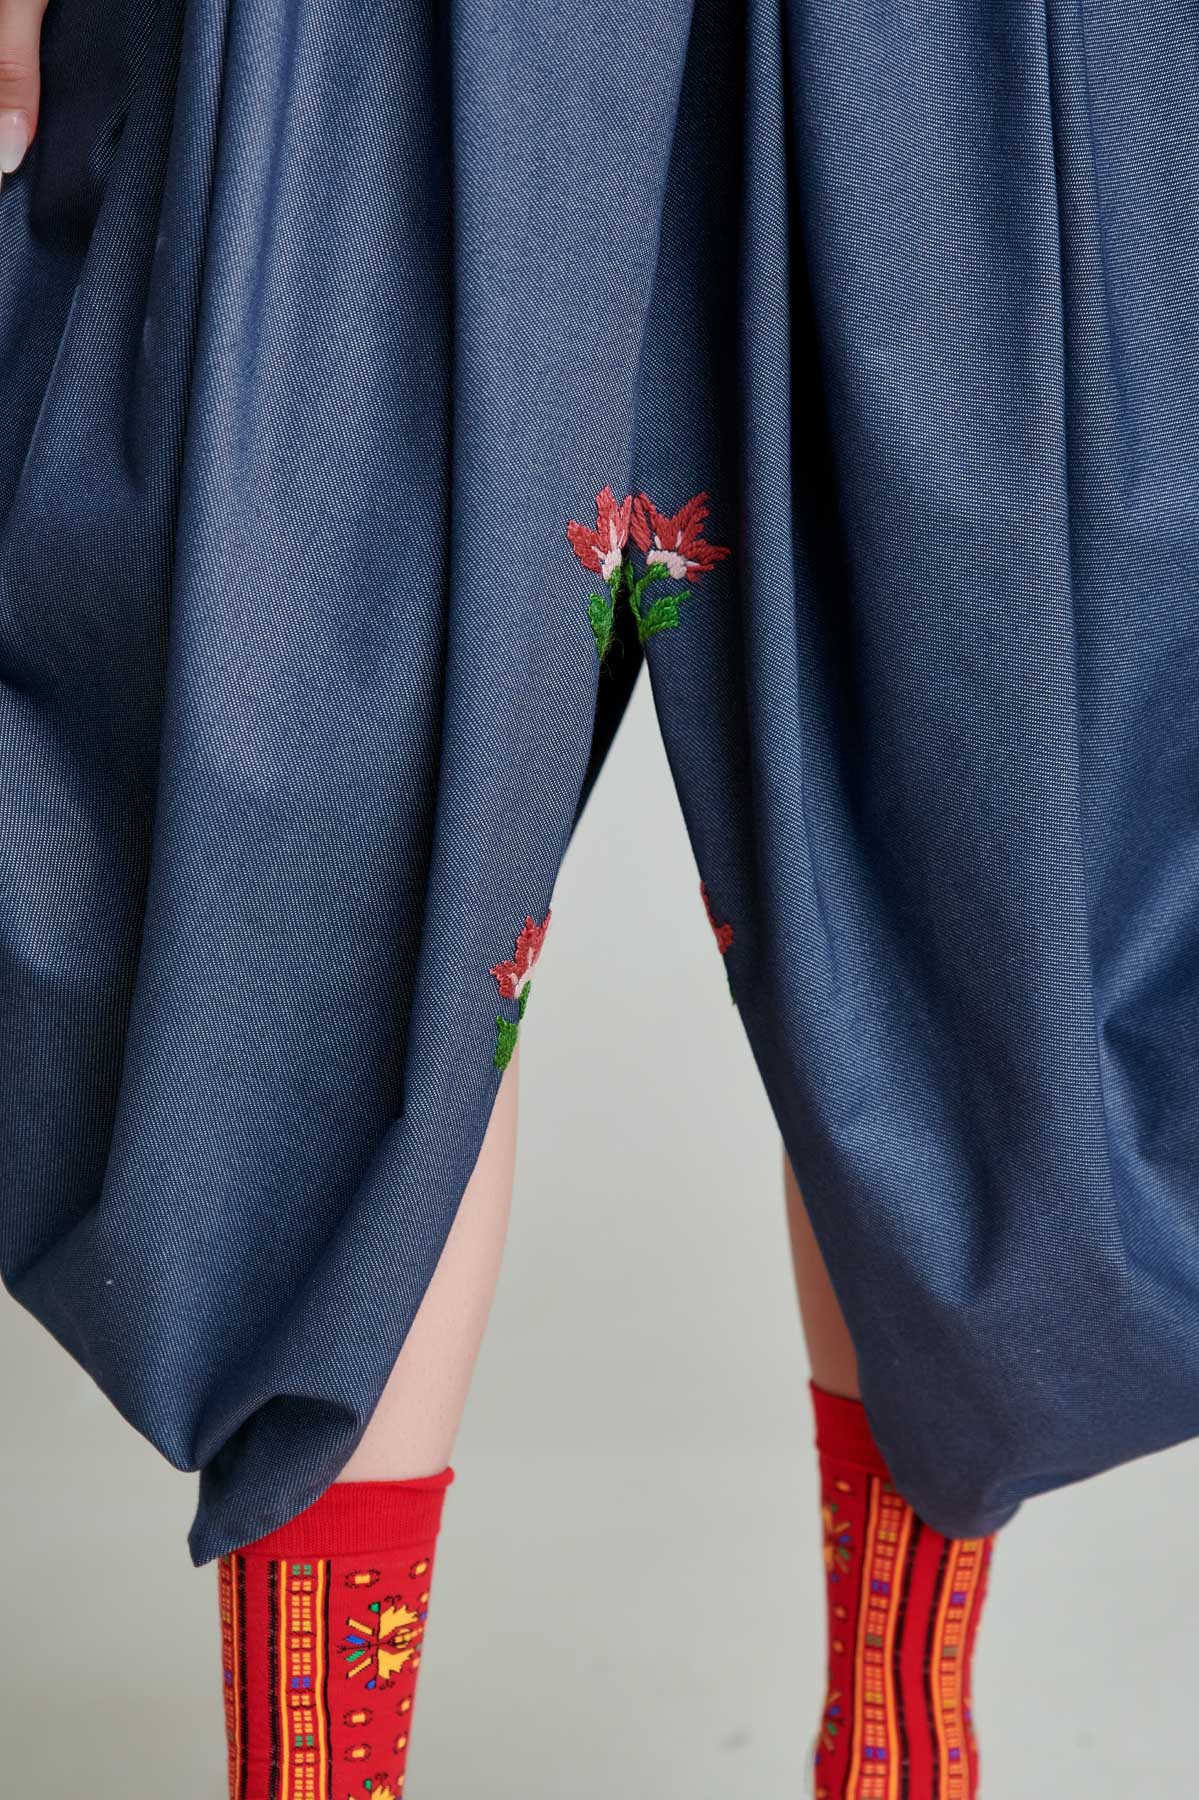 ROLA casual dress in denim. Natural fabrics, original design, handmade embroidery